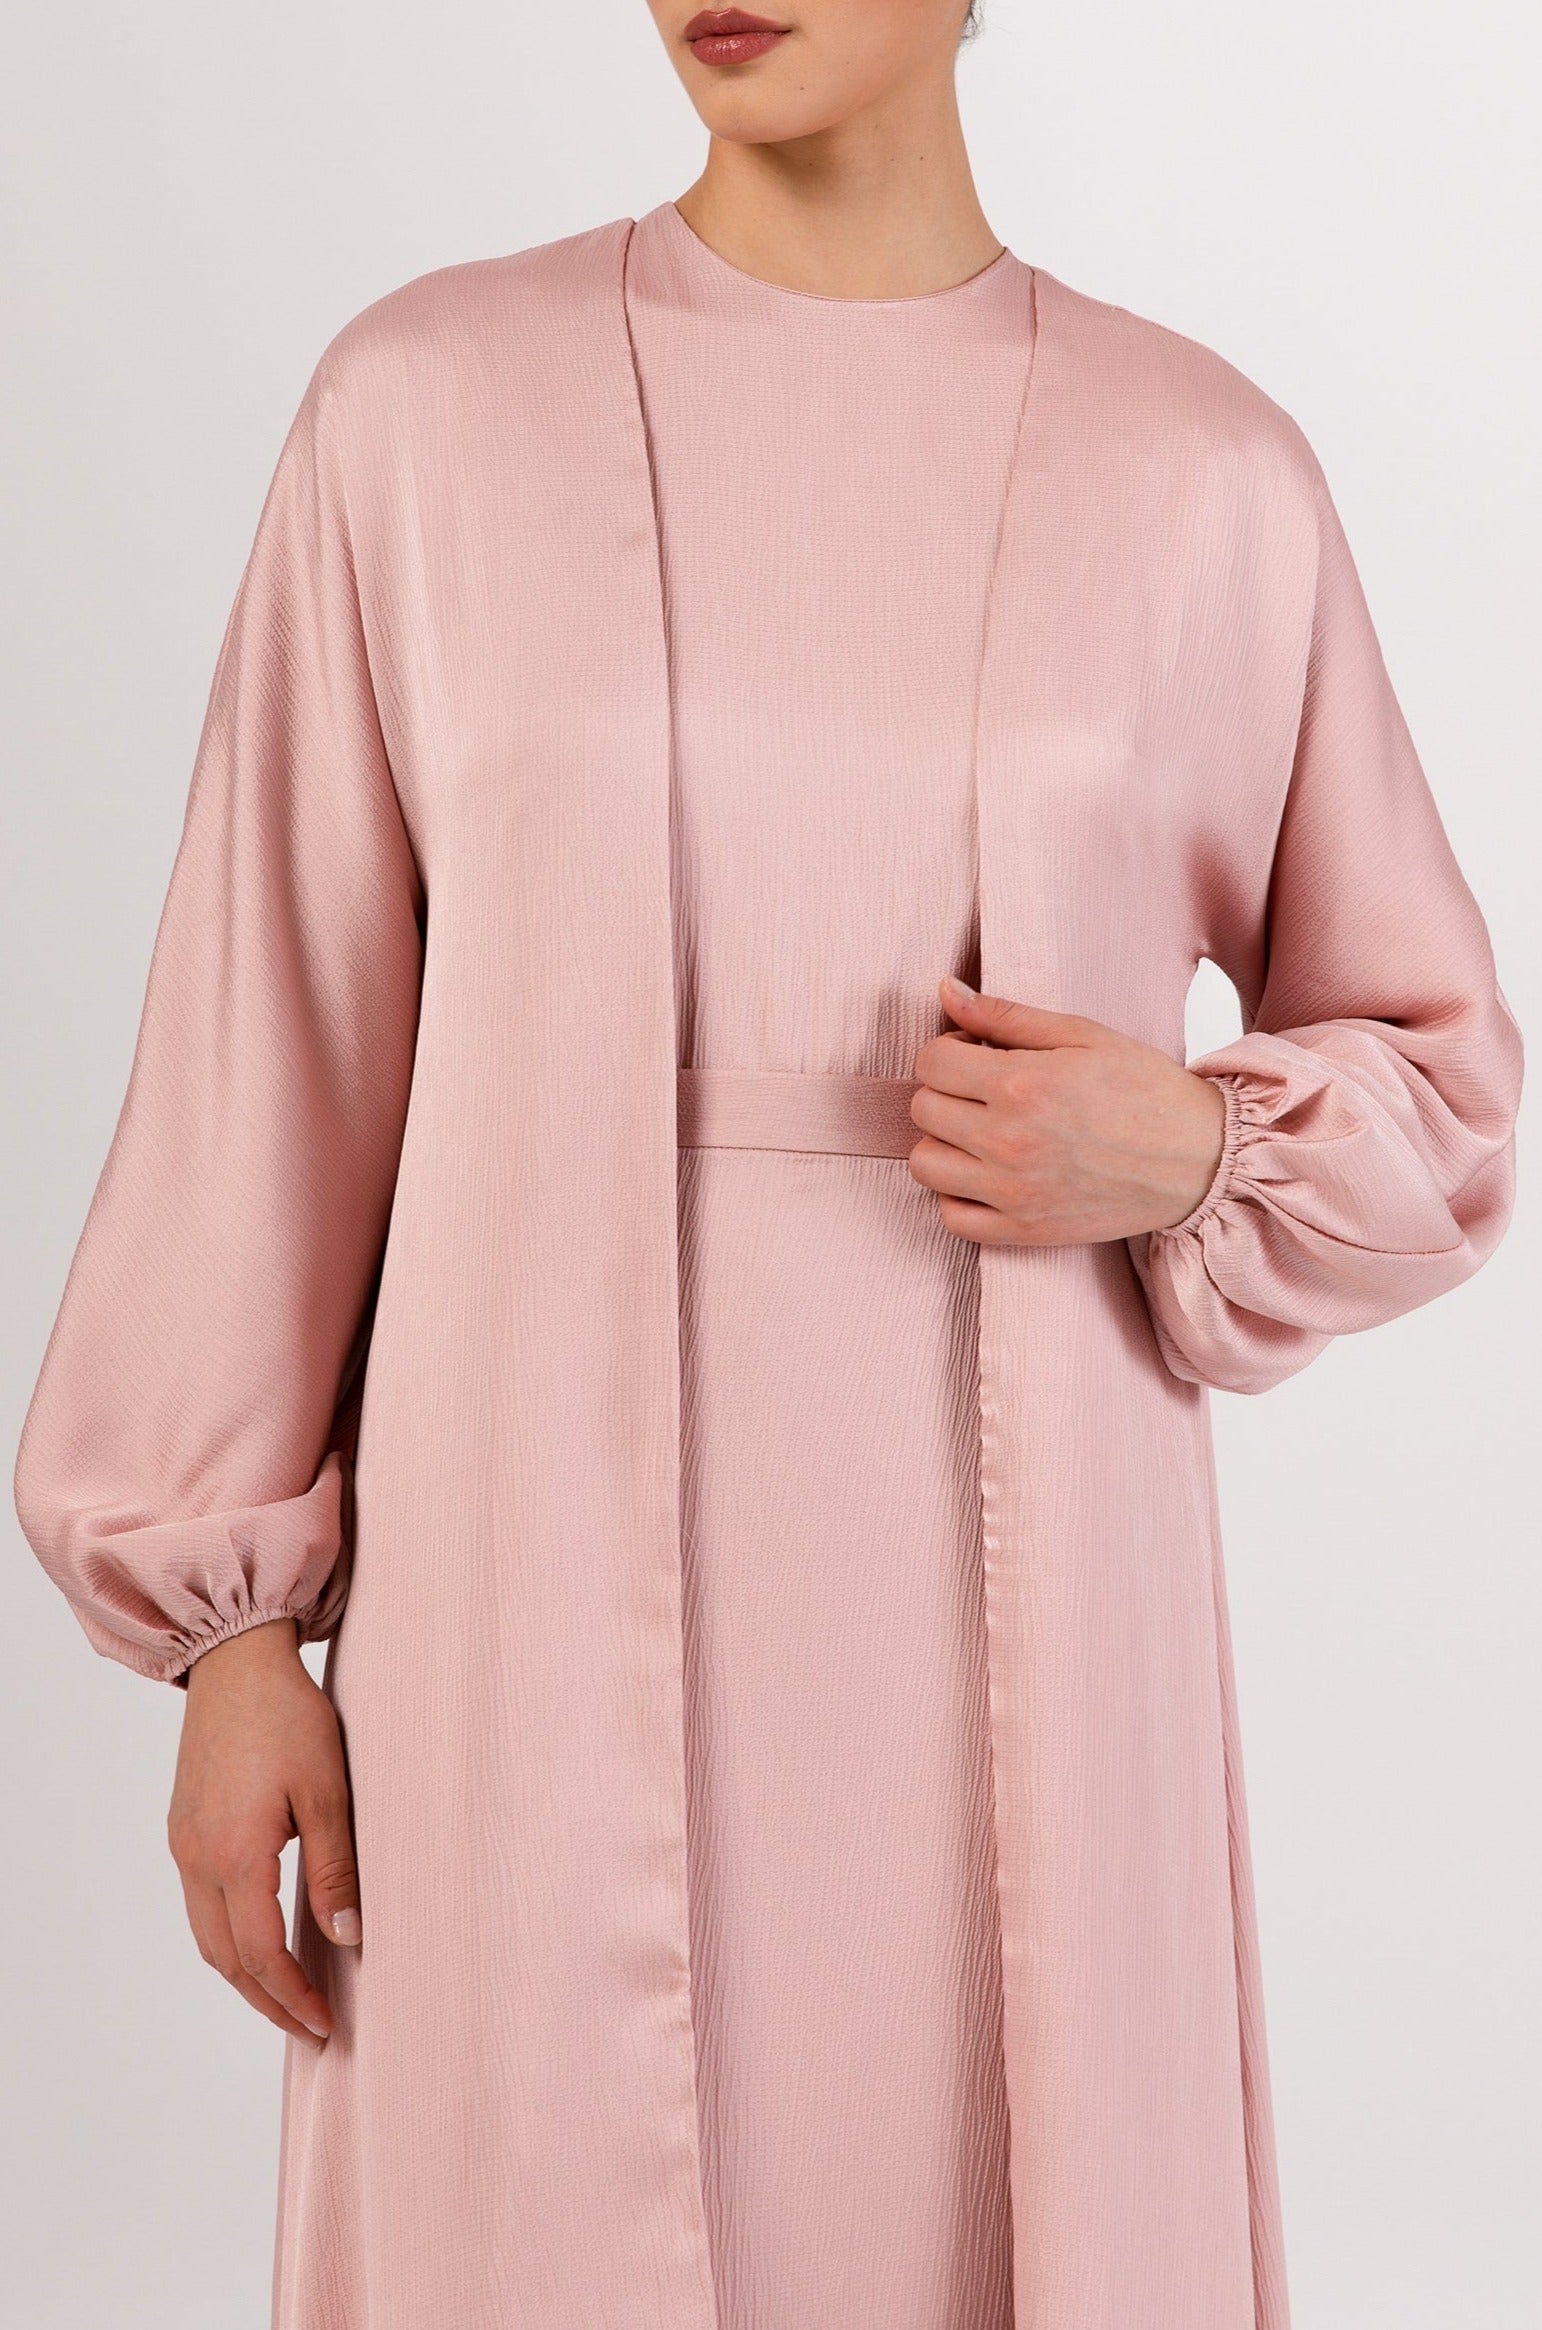 Salma Open Abaya - Dusty Pink Veiled 